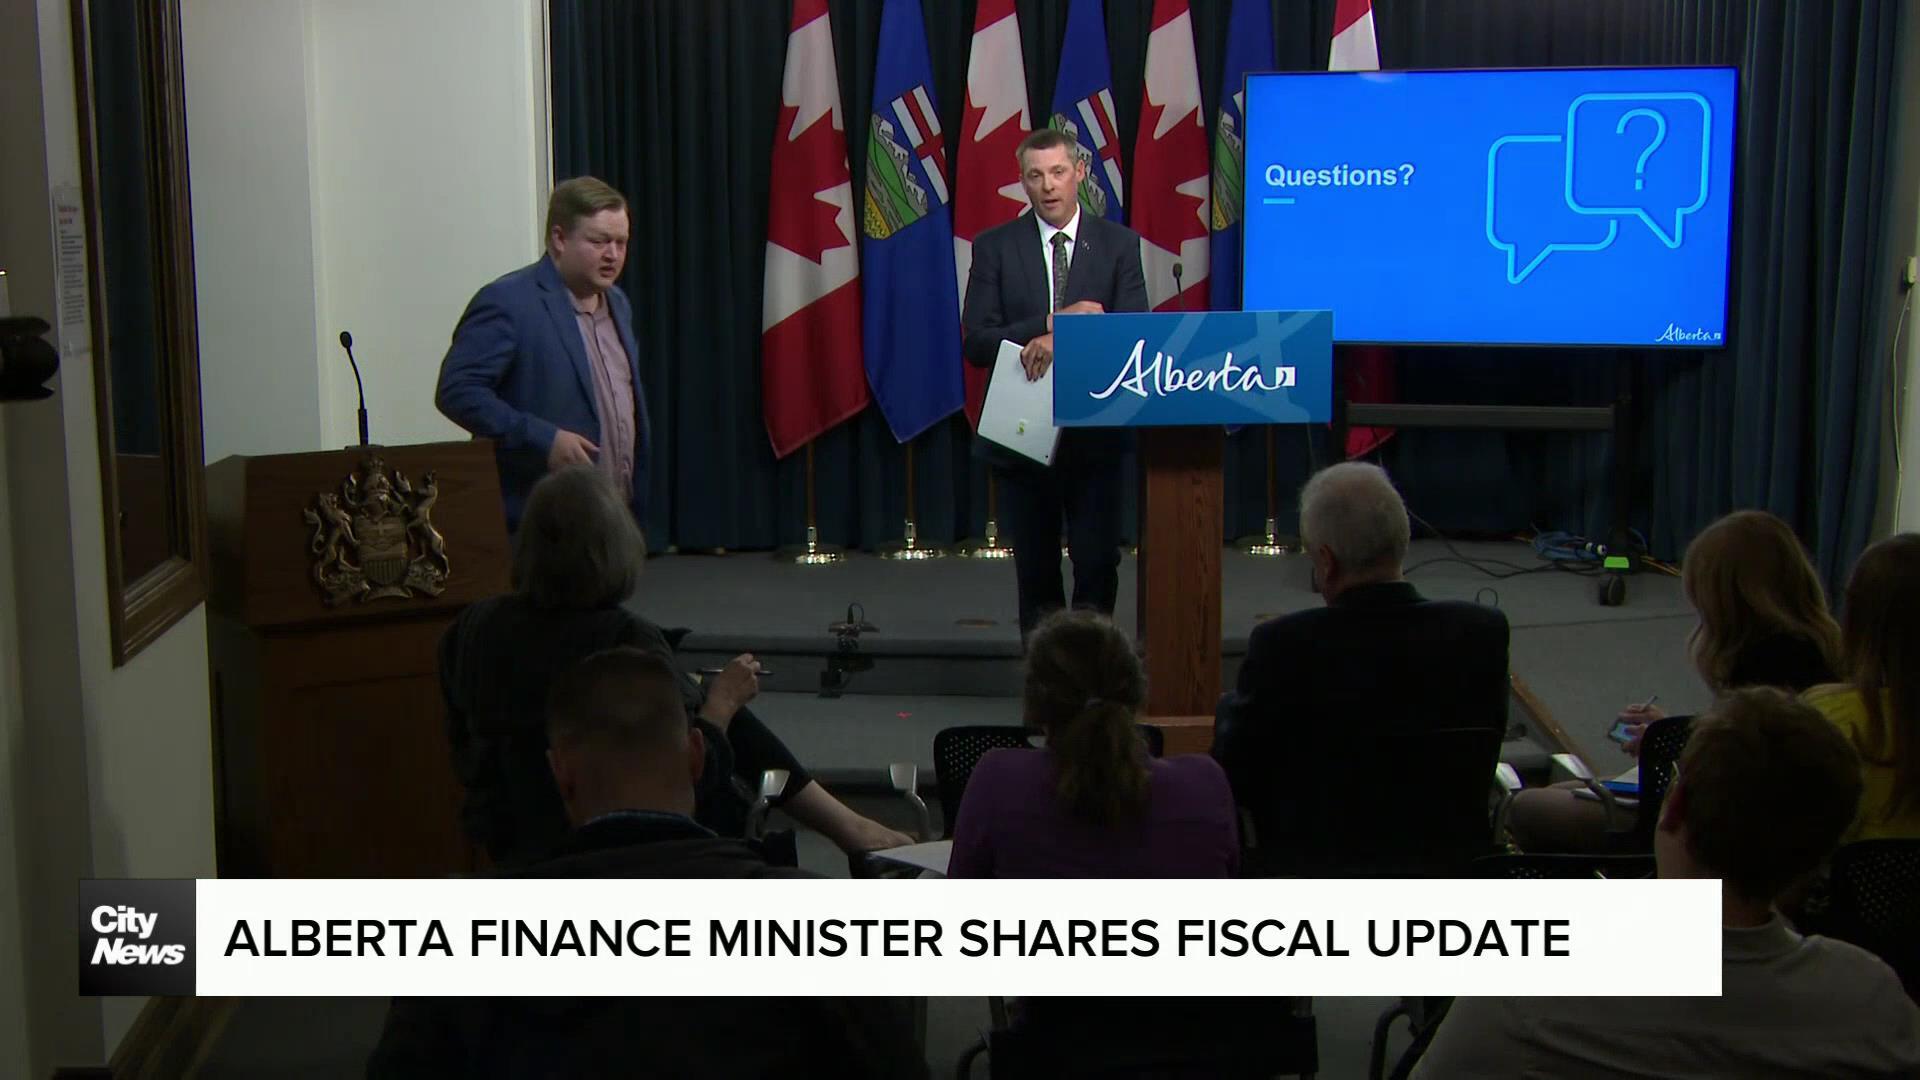 Alberta Finance Minister shares fiscal update